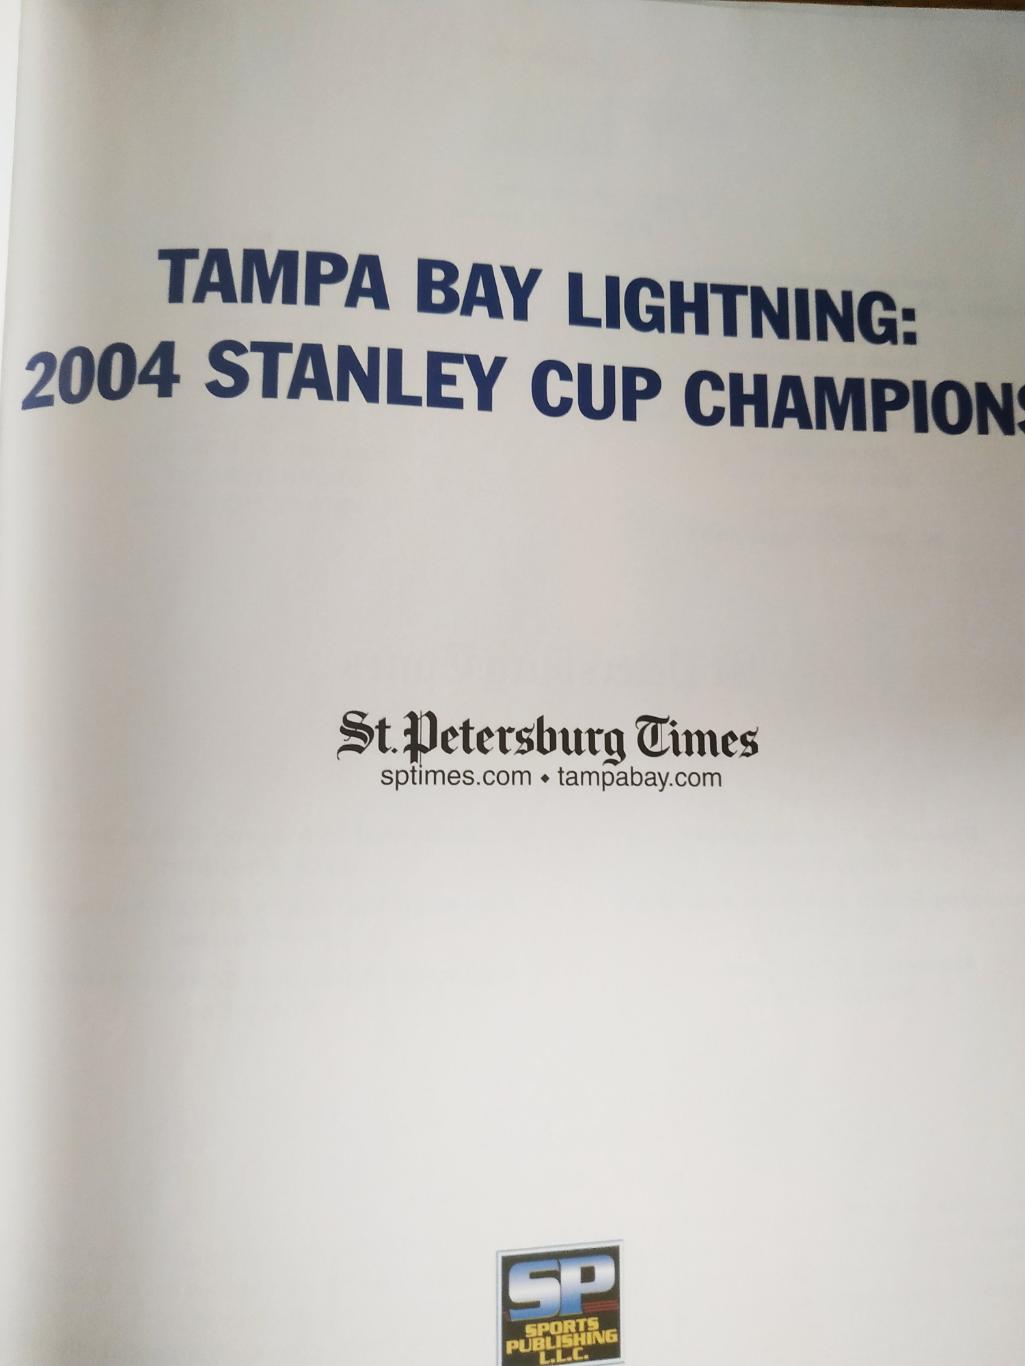 ХОККЕЙ КНИГА НХЛ 2004 TAMPA BAY LIGHTNING THE STANLEY CUP CHAMPIONS 1